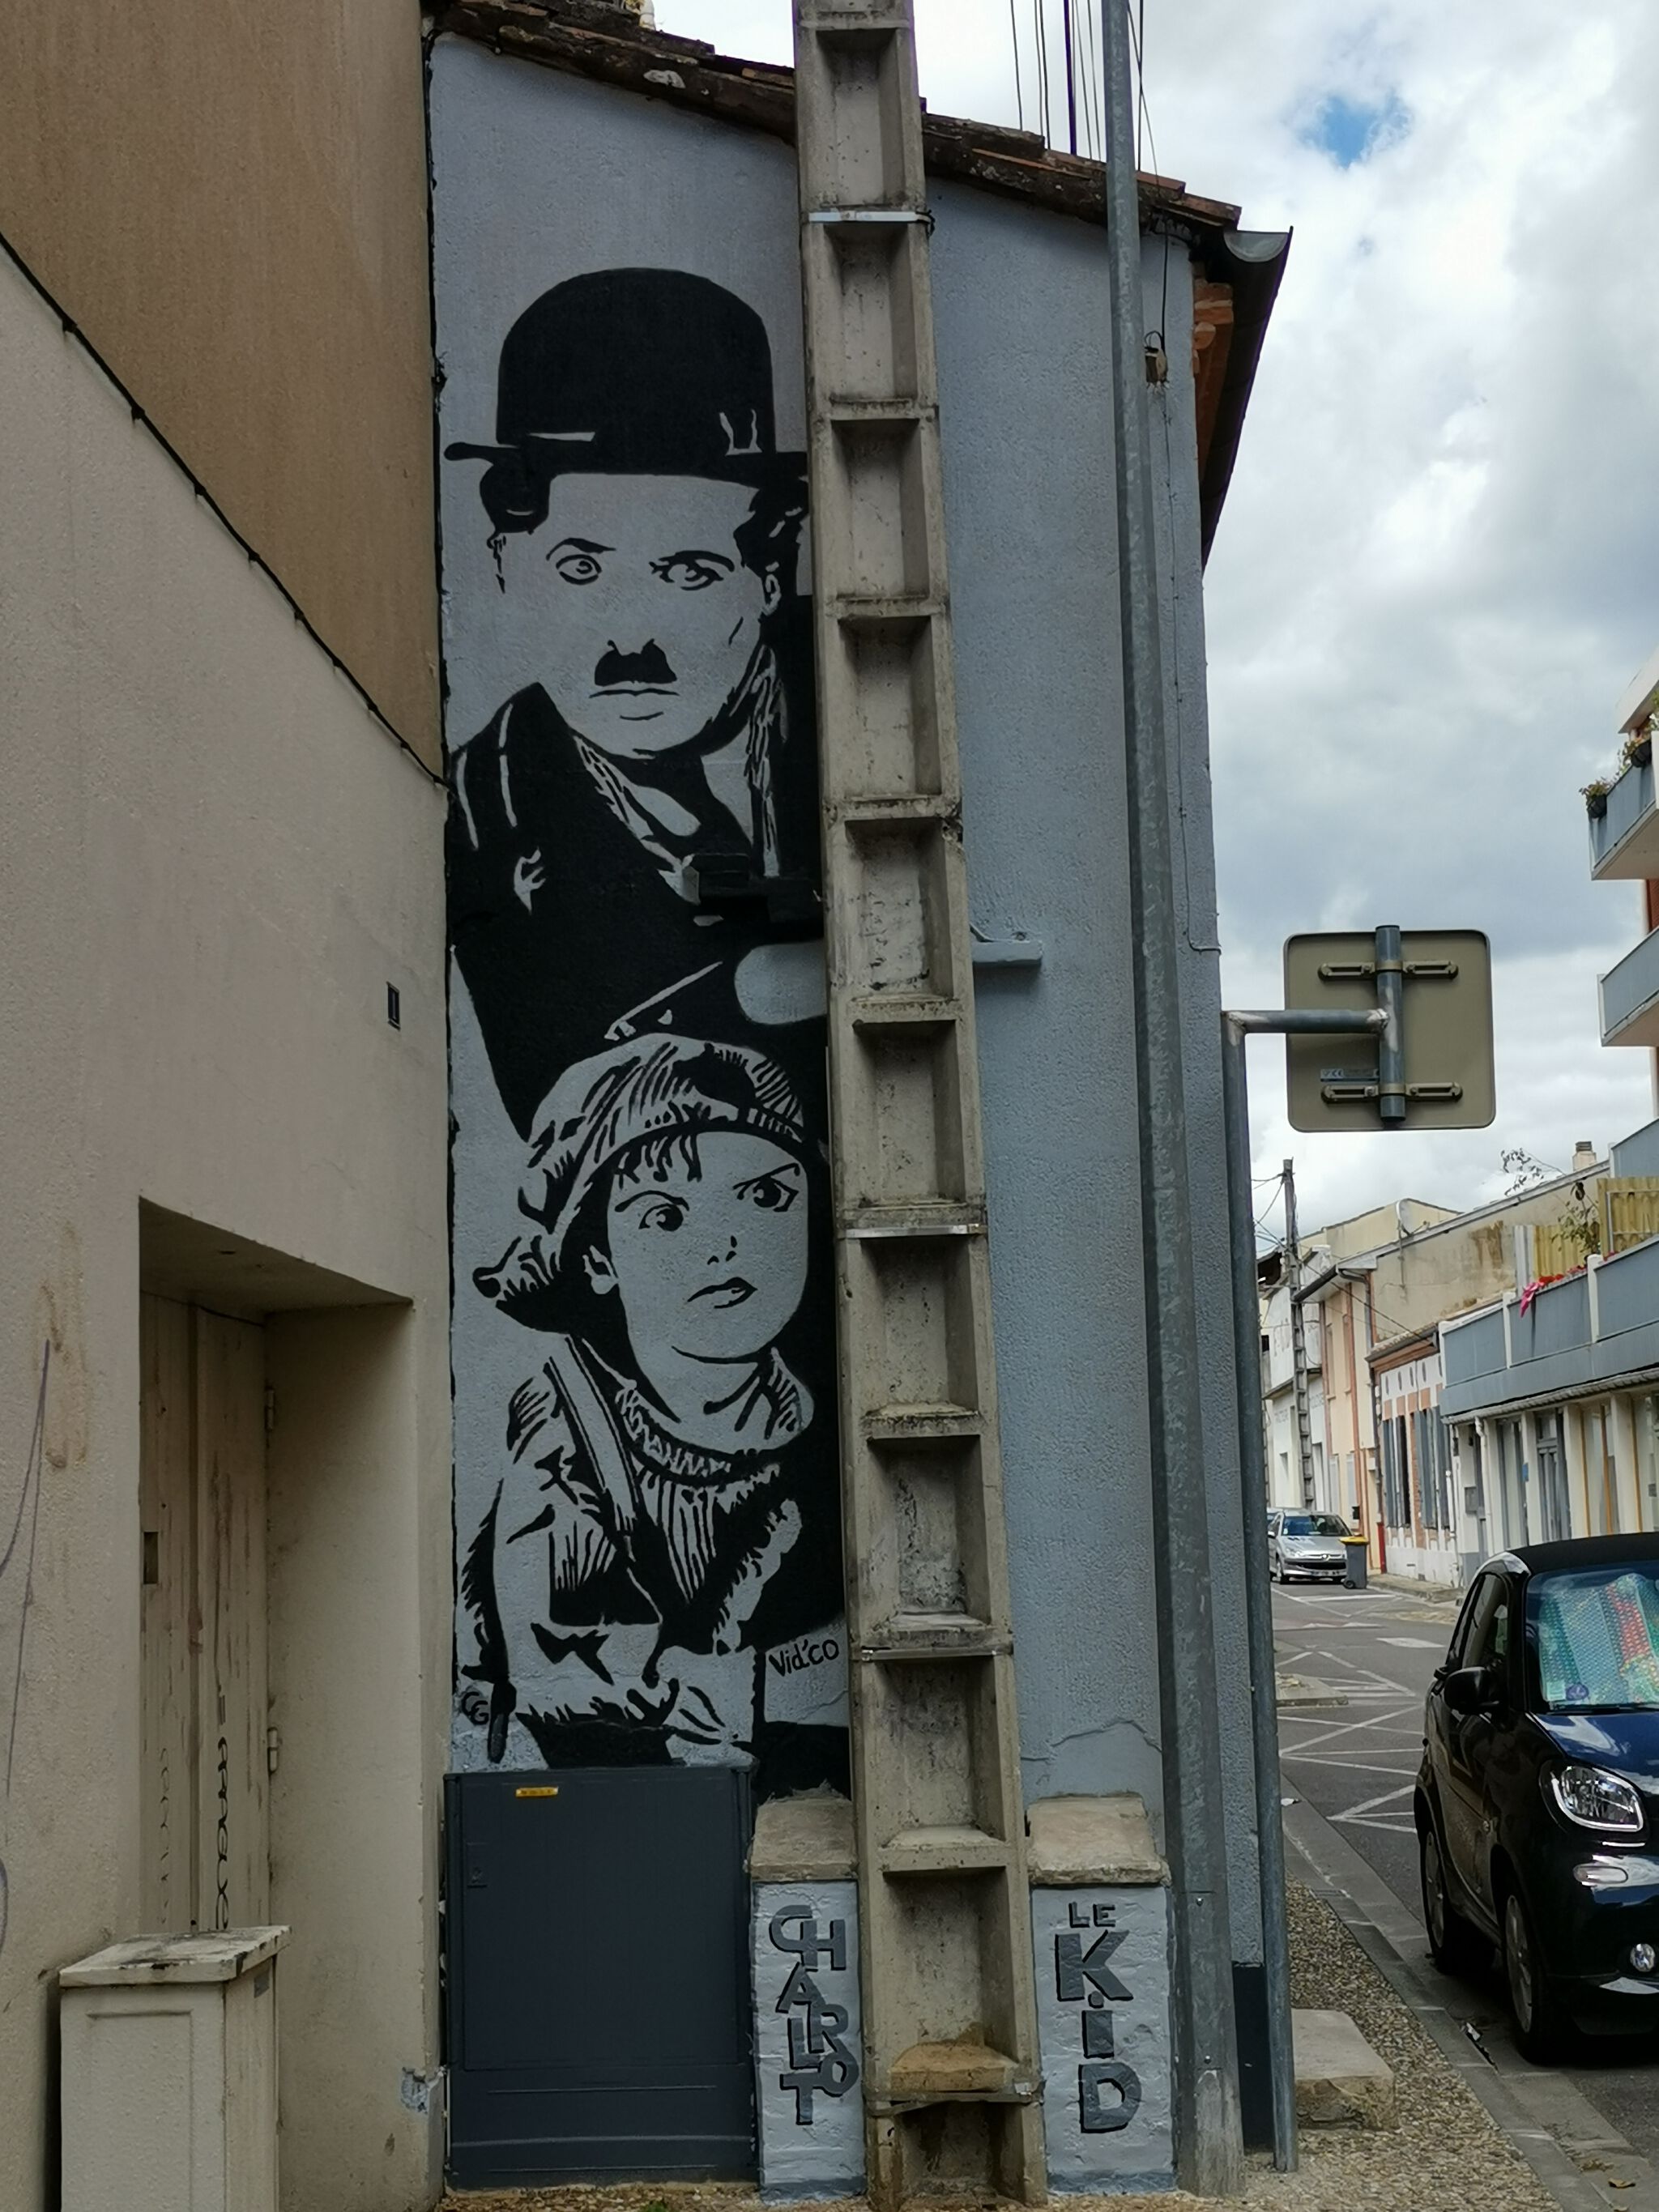 Vid Co&mdash;"The KID" Charlie Chaplin